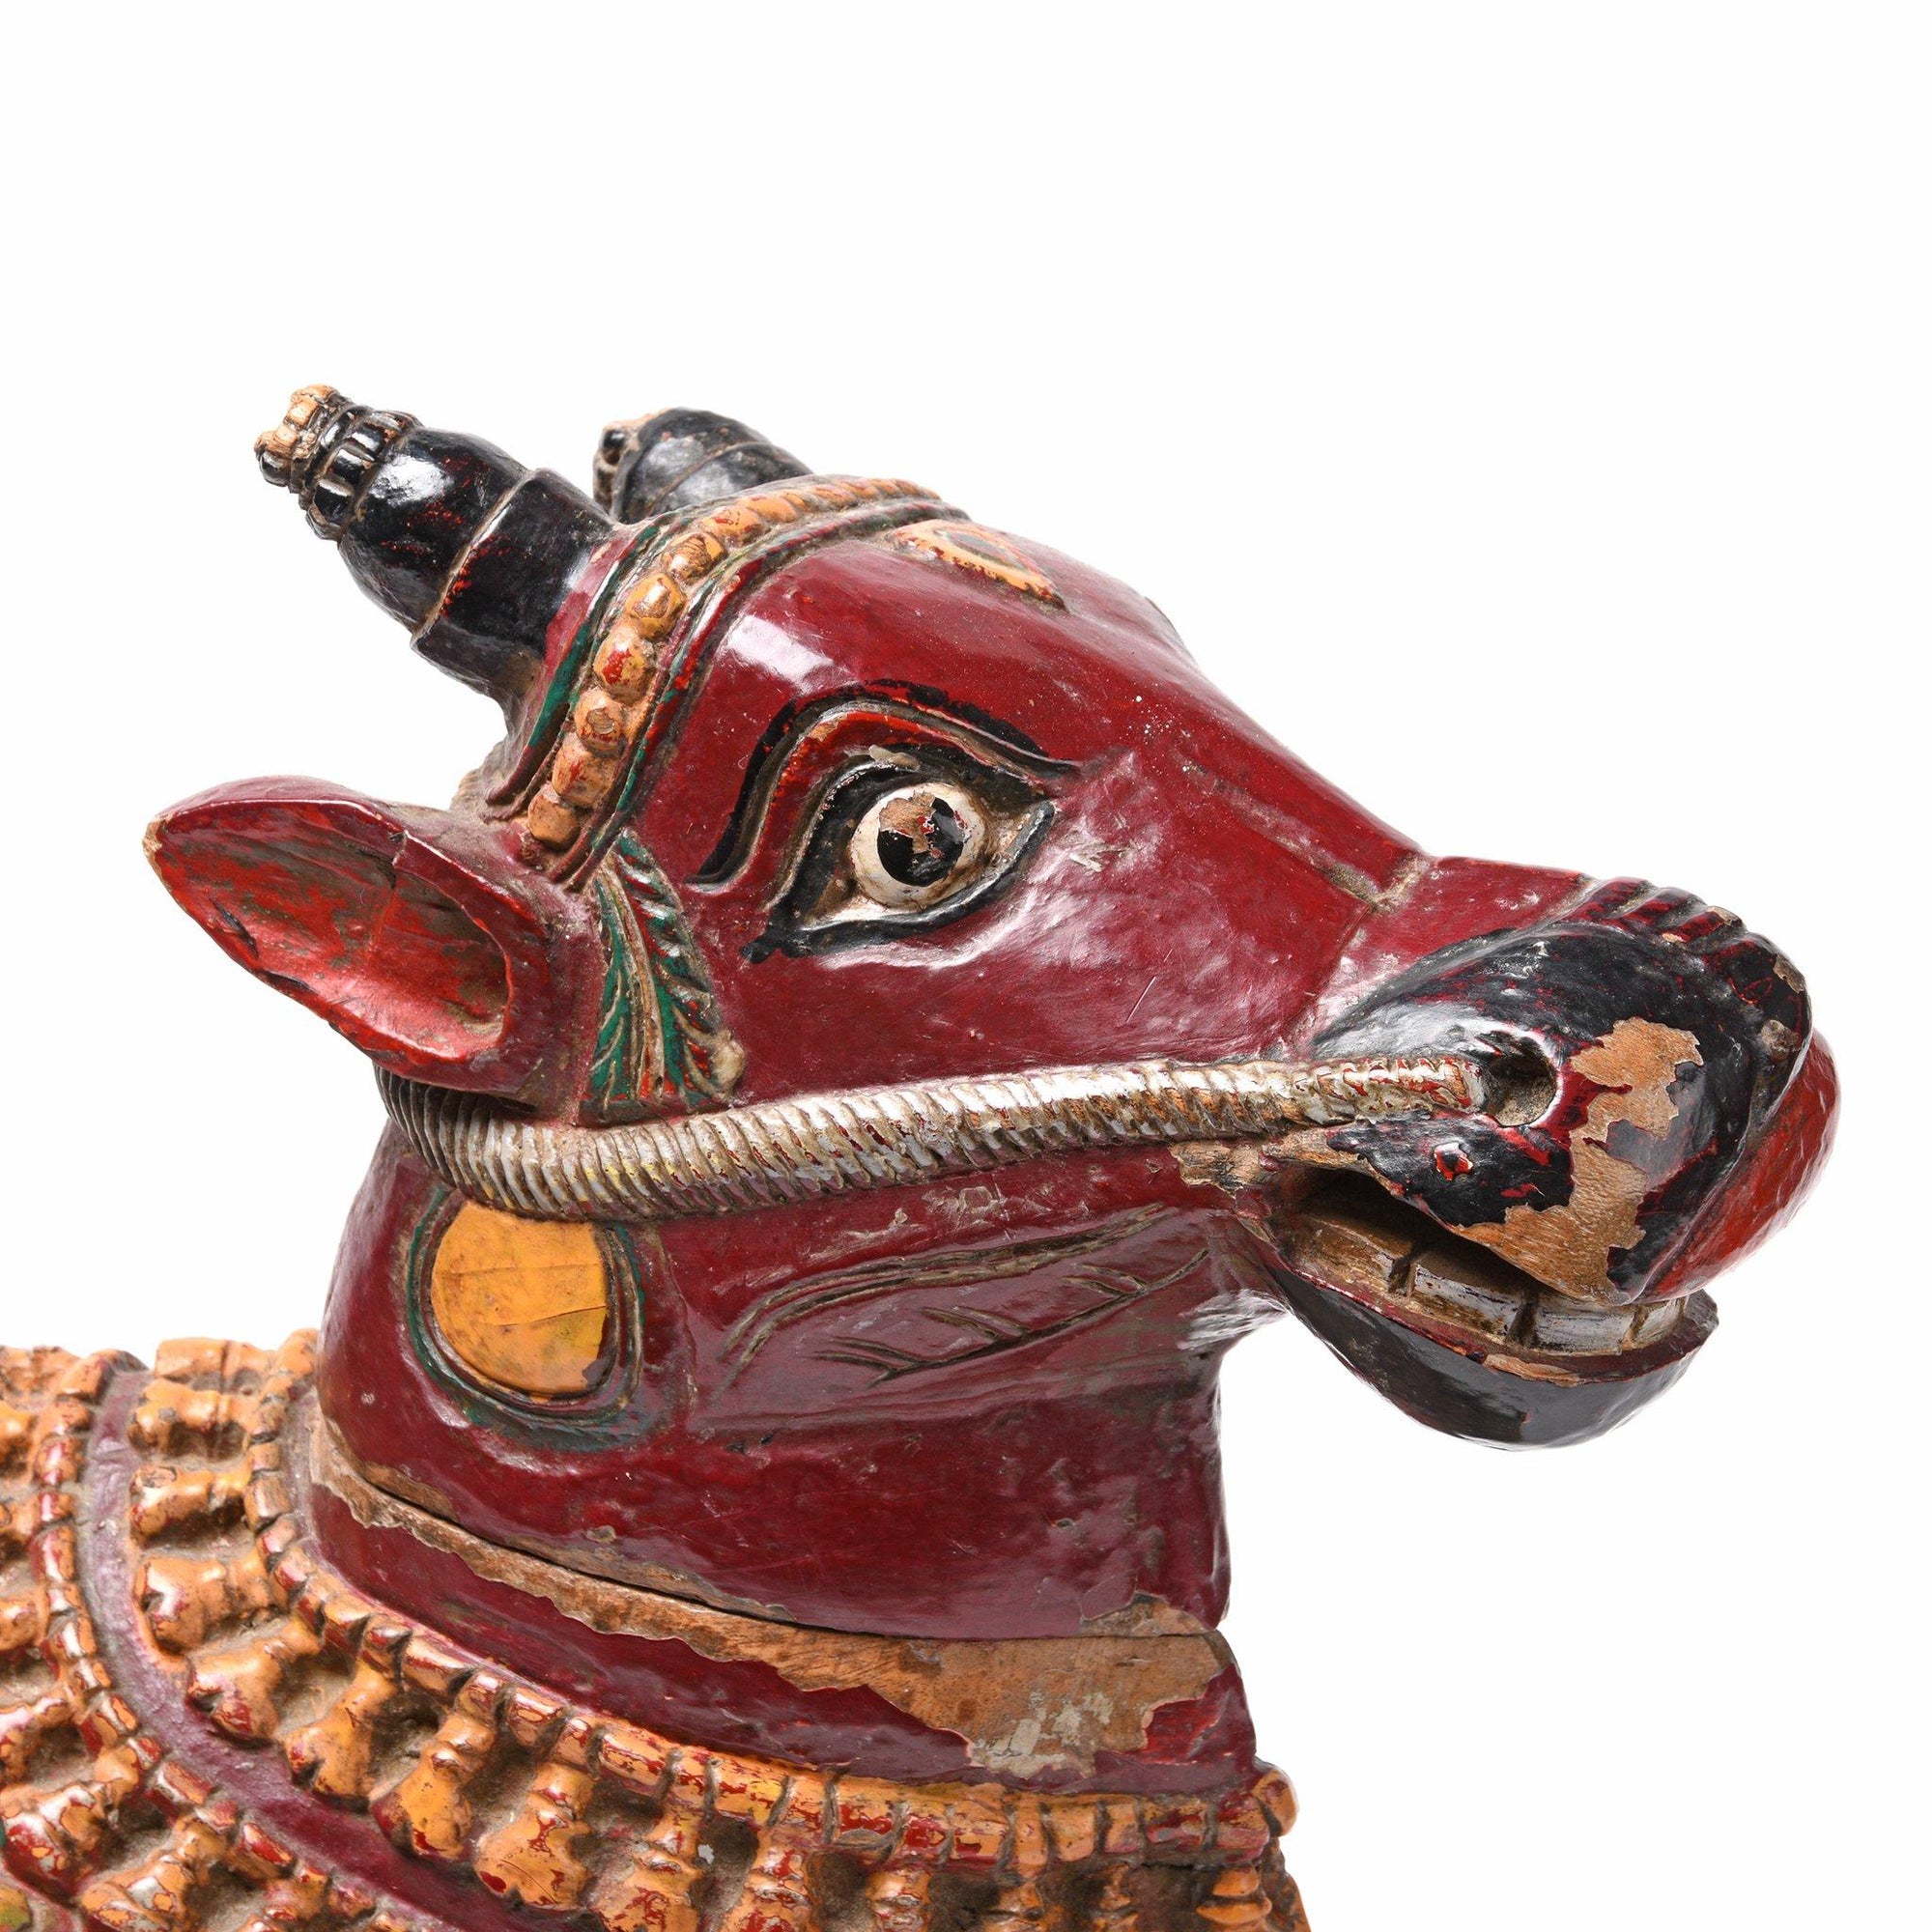 Painted Indian Nandi Bull From Tamil Nadu - Ca 1920 | Indigo Antiques